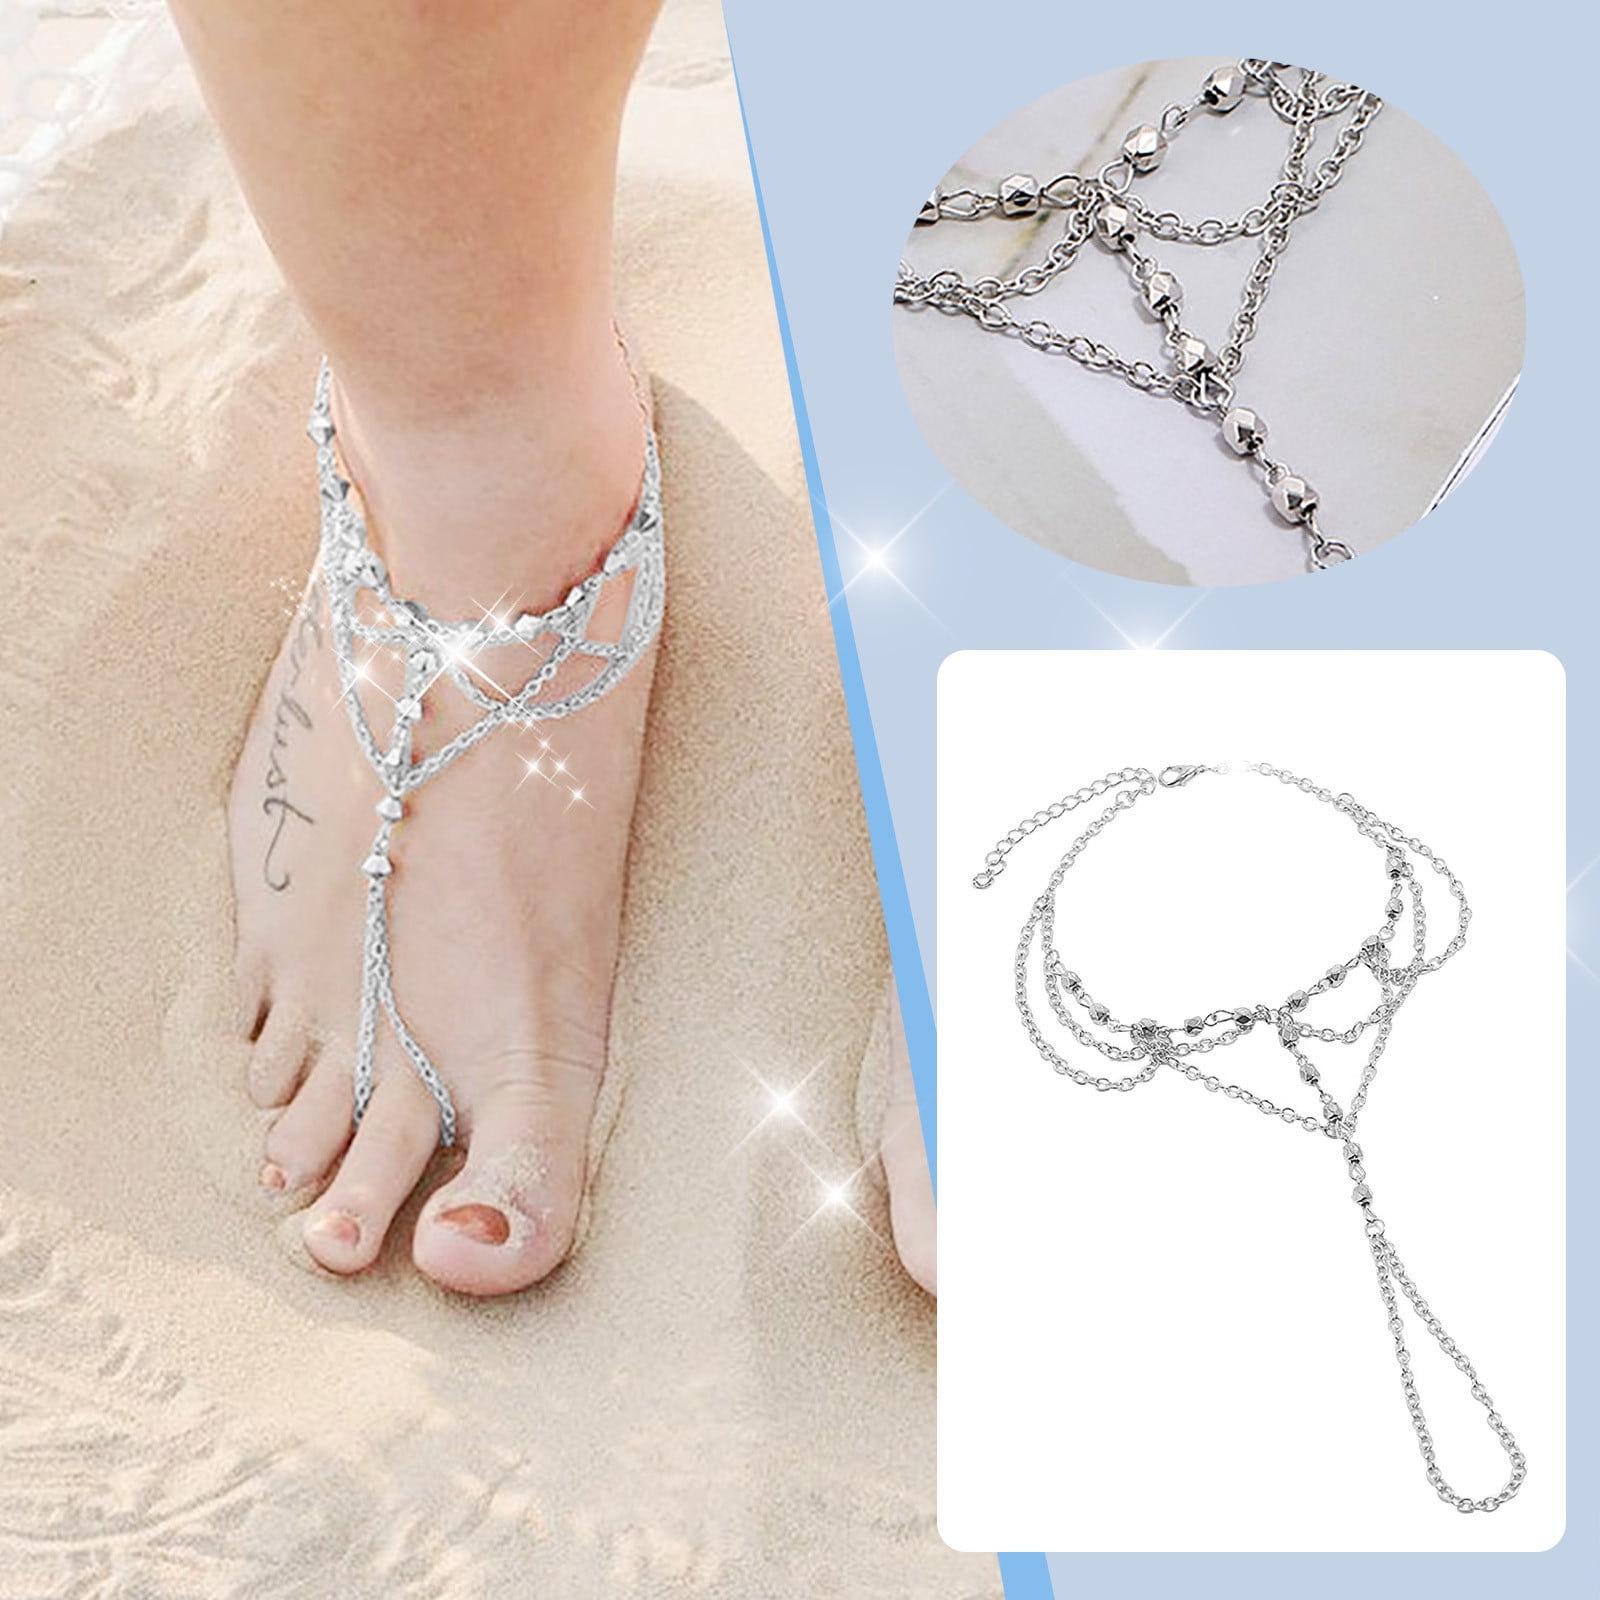 Modyle 3pcs/set Anklets for Women Foot Accessories Summer Beach